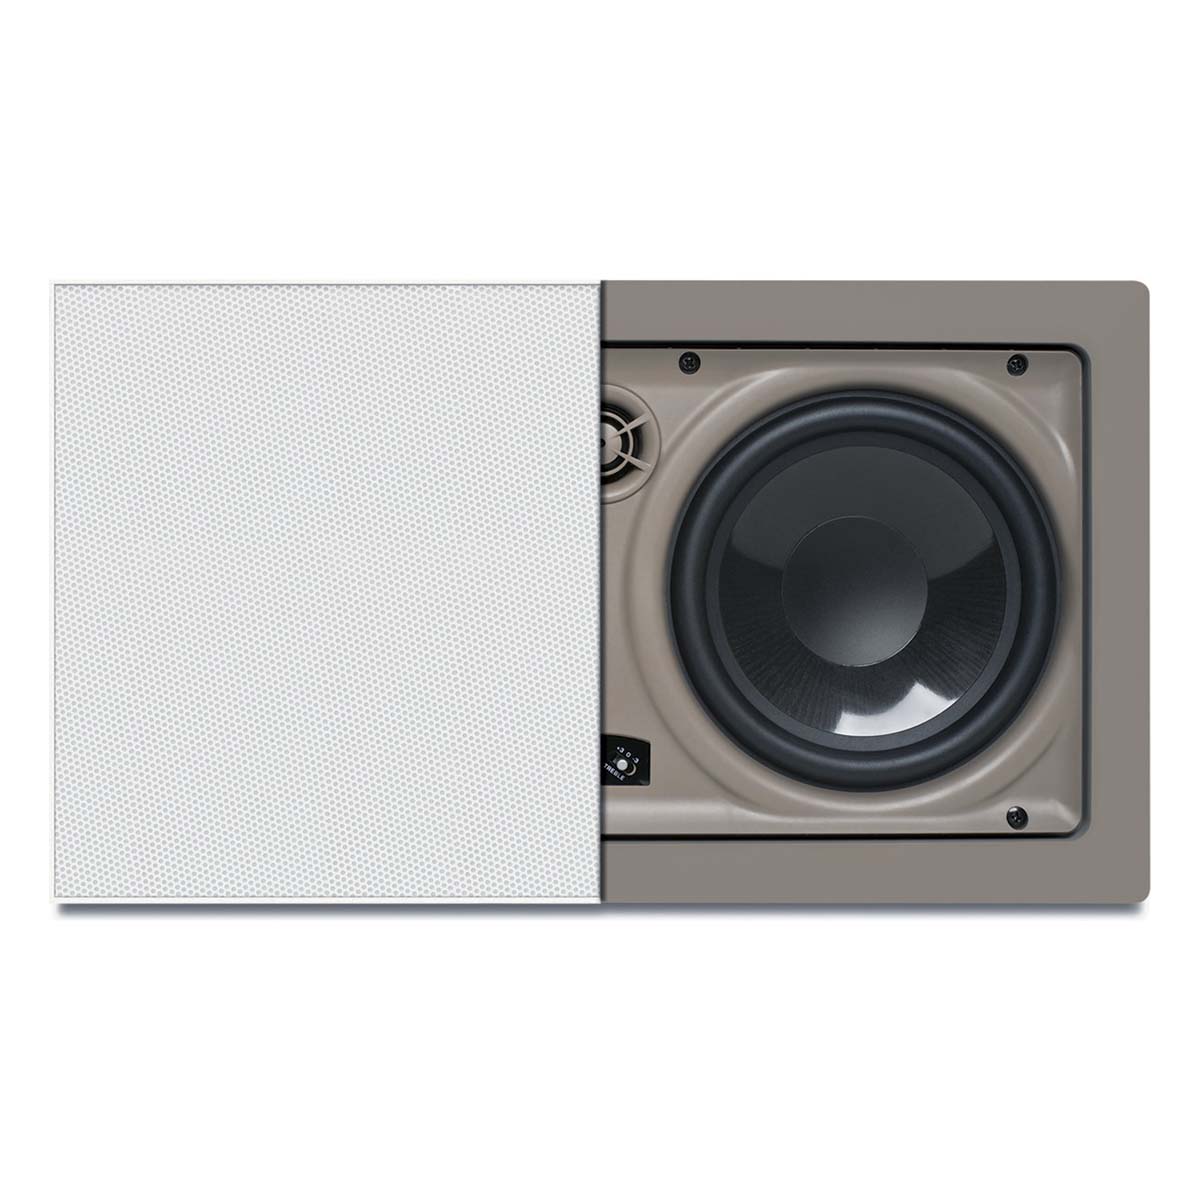 Proficient Audio Protege W630 In-Wall Speakers